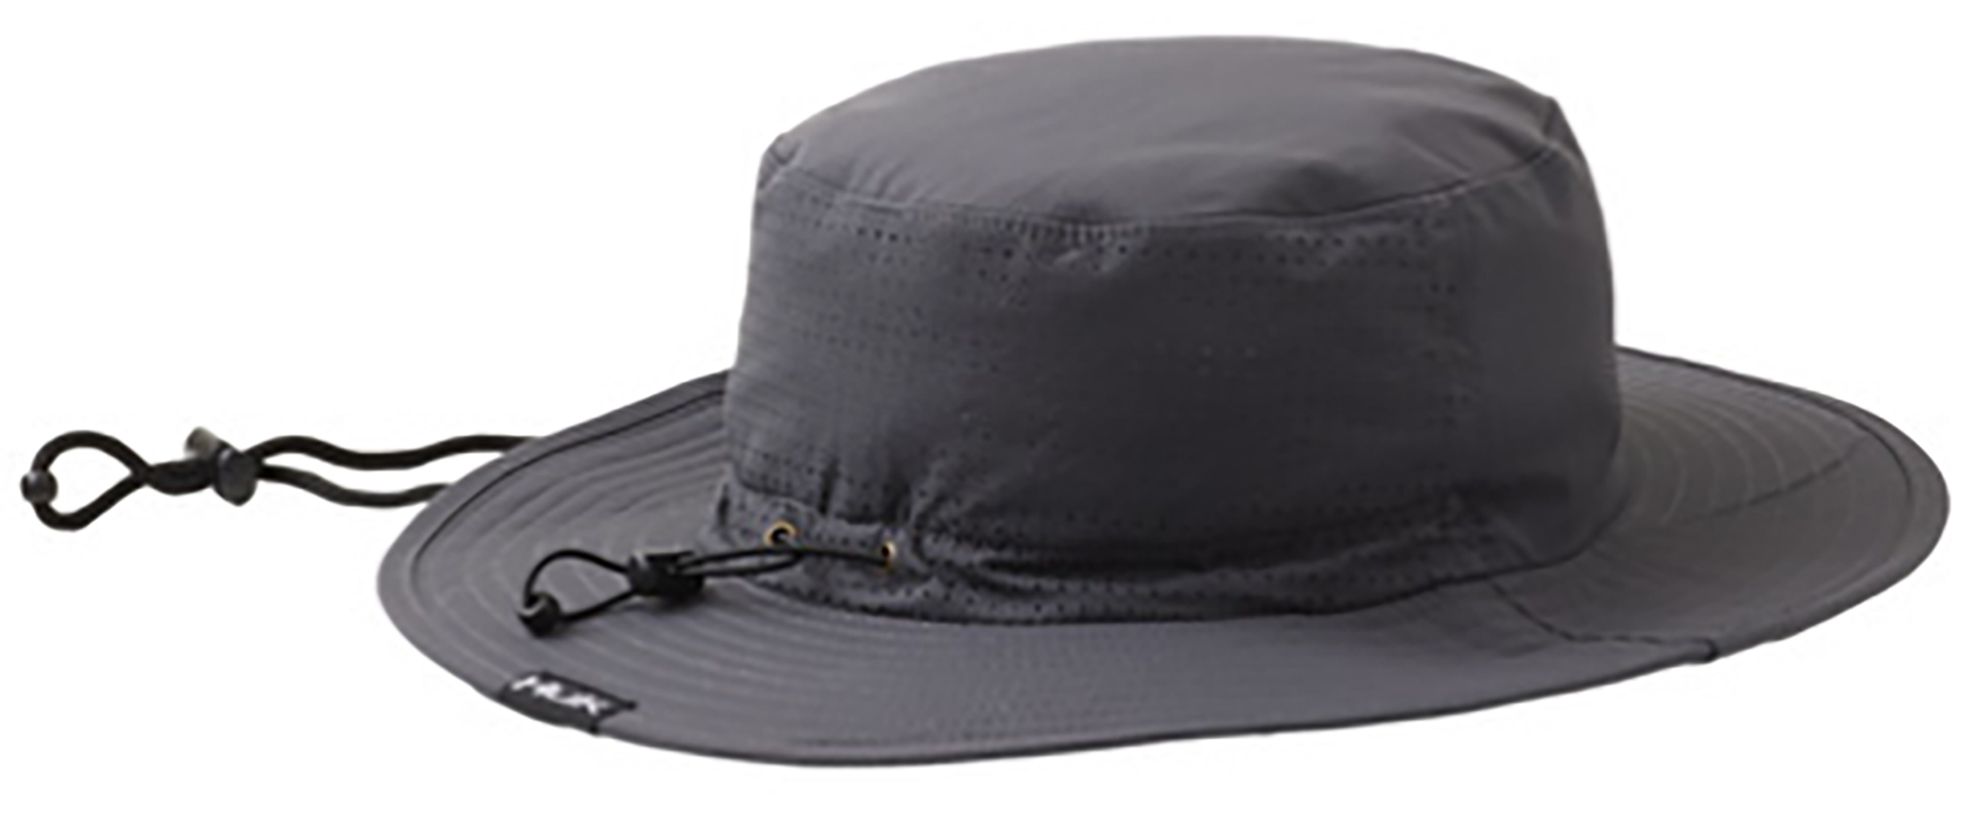 Dick's Sporting Goods HUK Men's Solid Boonie Hat